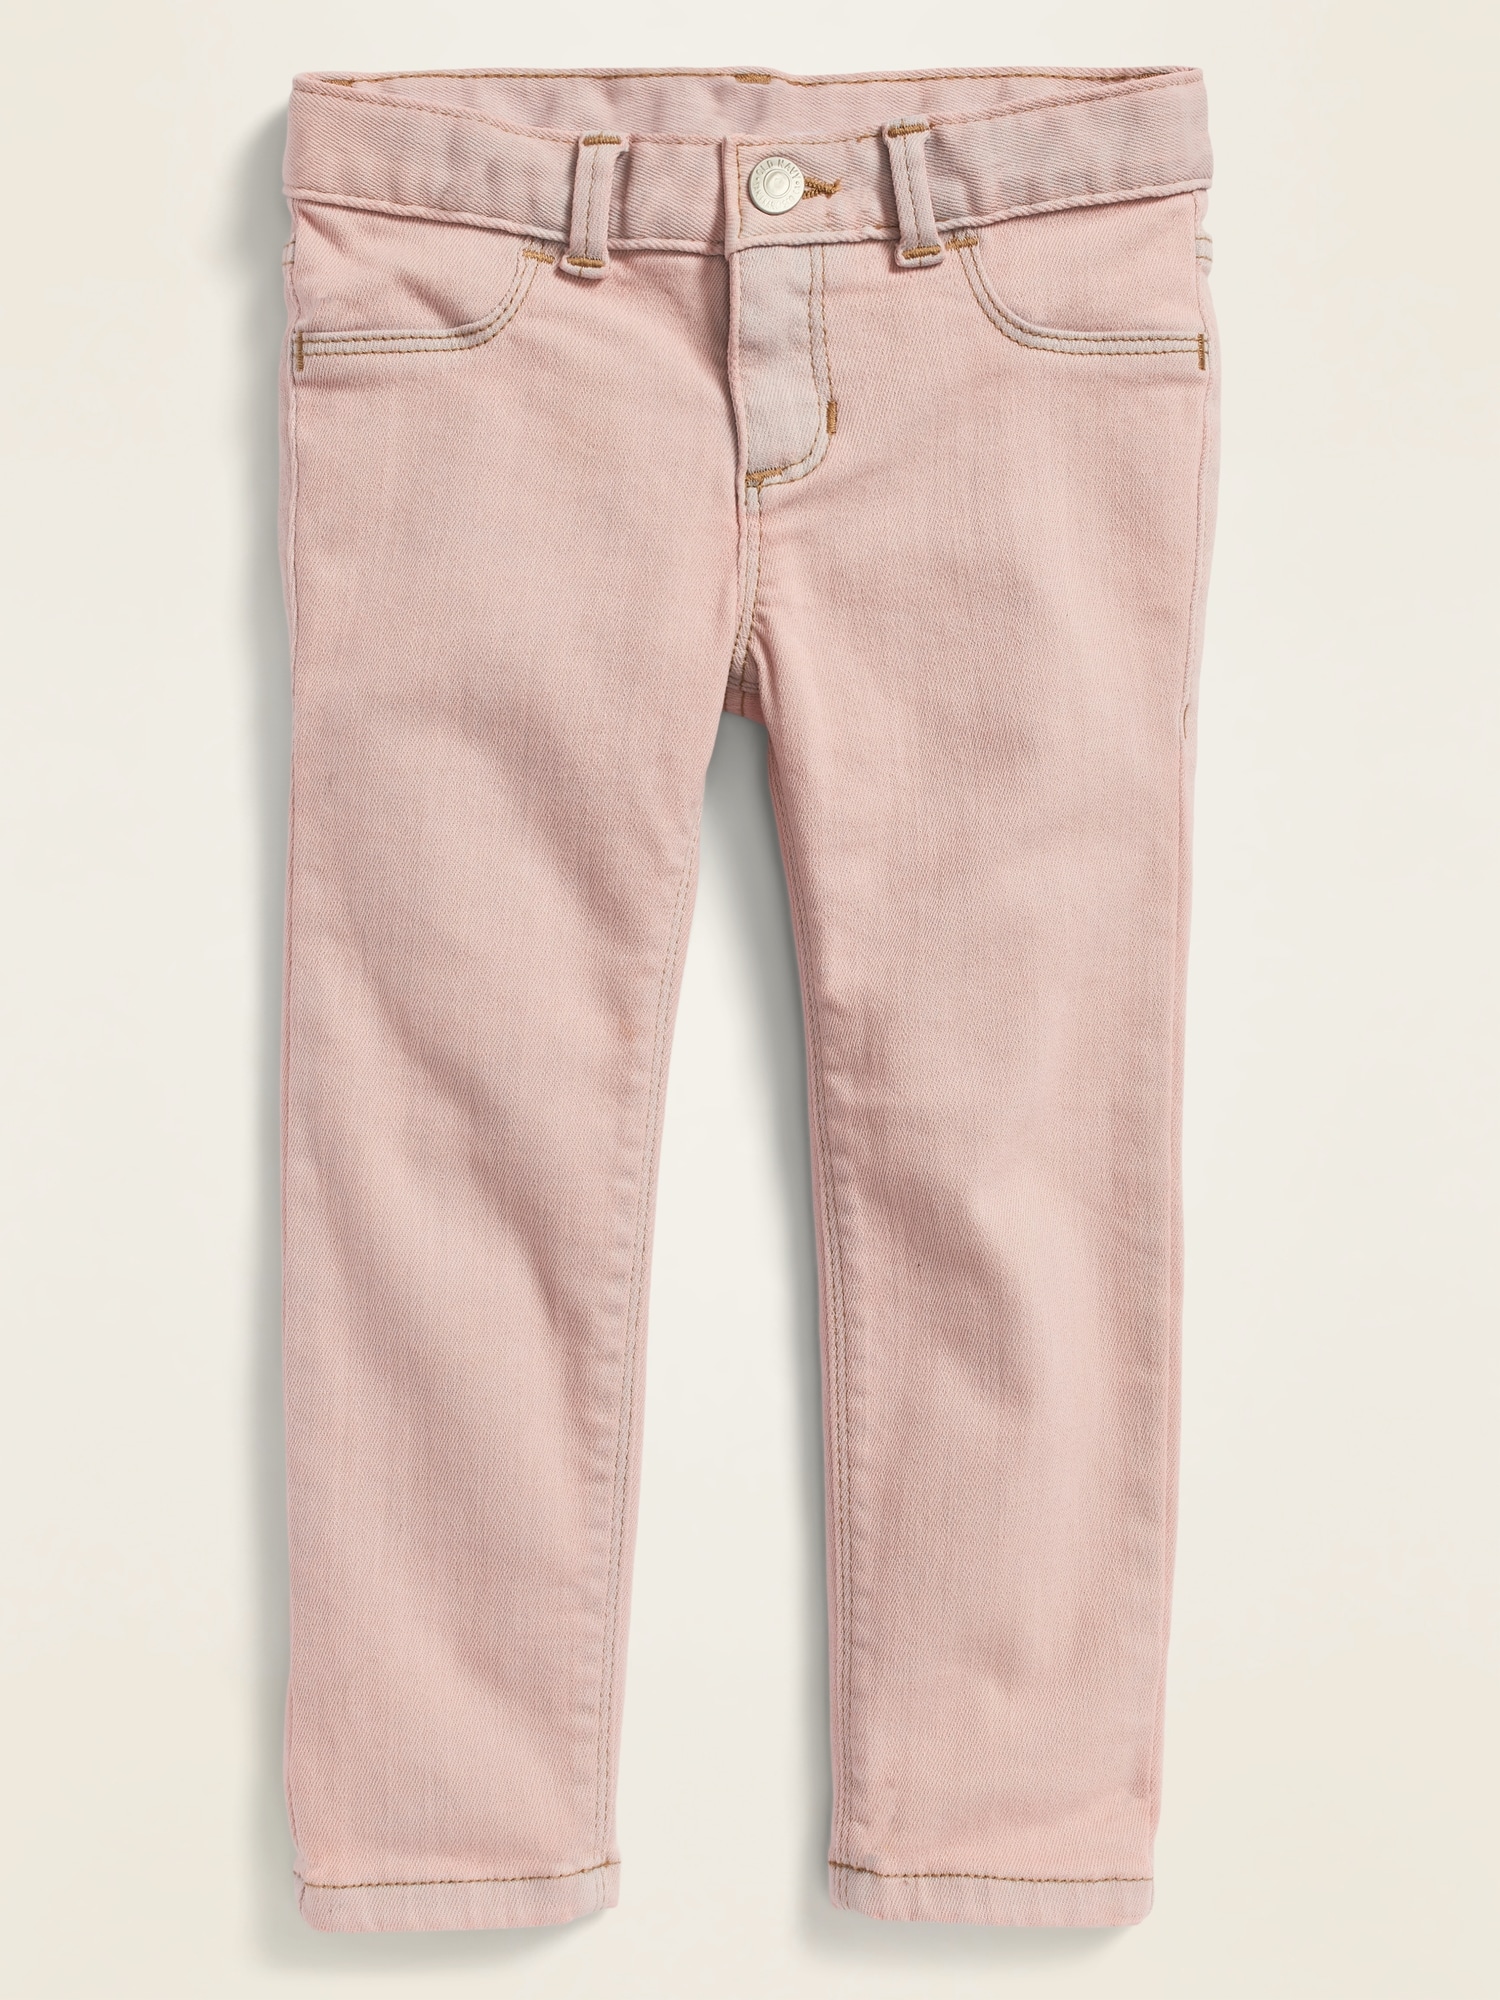 H&M Baby Girl Pink Jeggings Pants